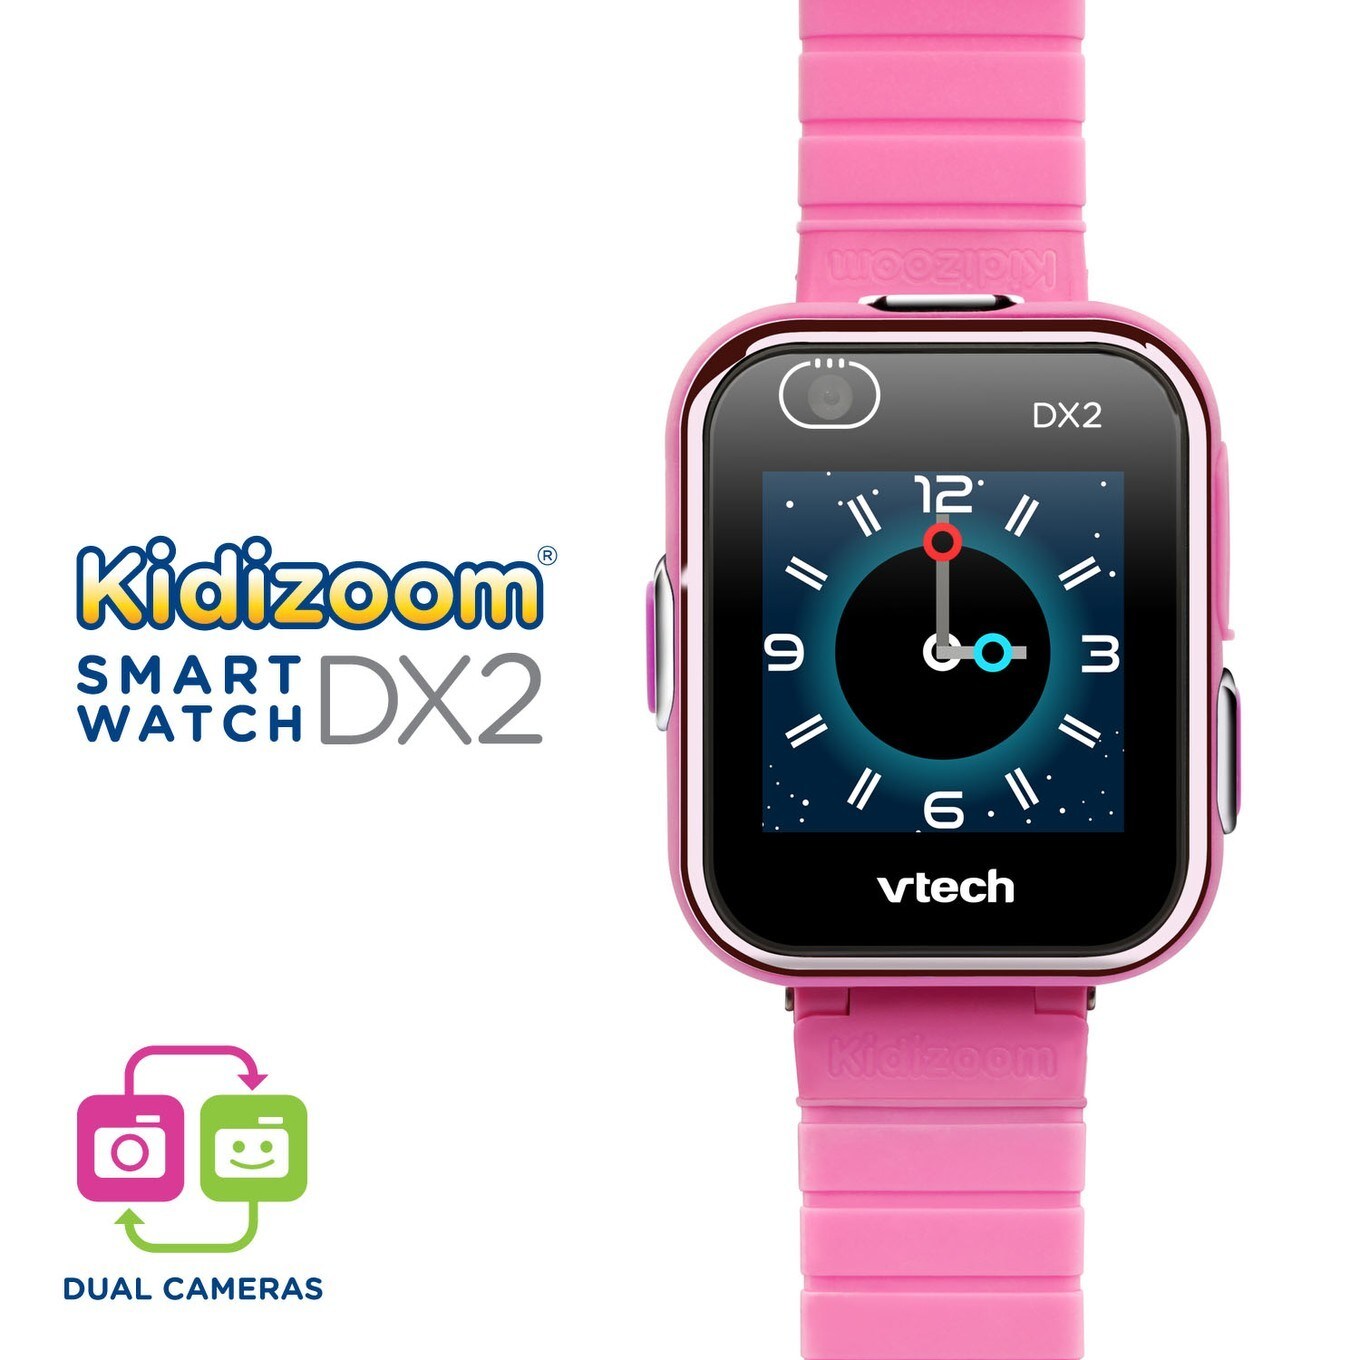 kidizoom smartwatch dx2 pink